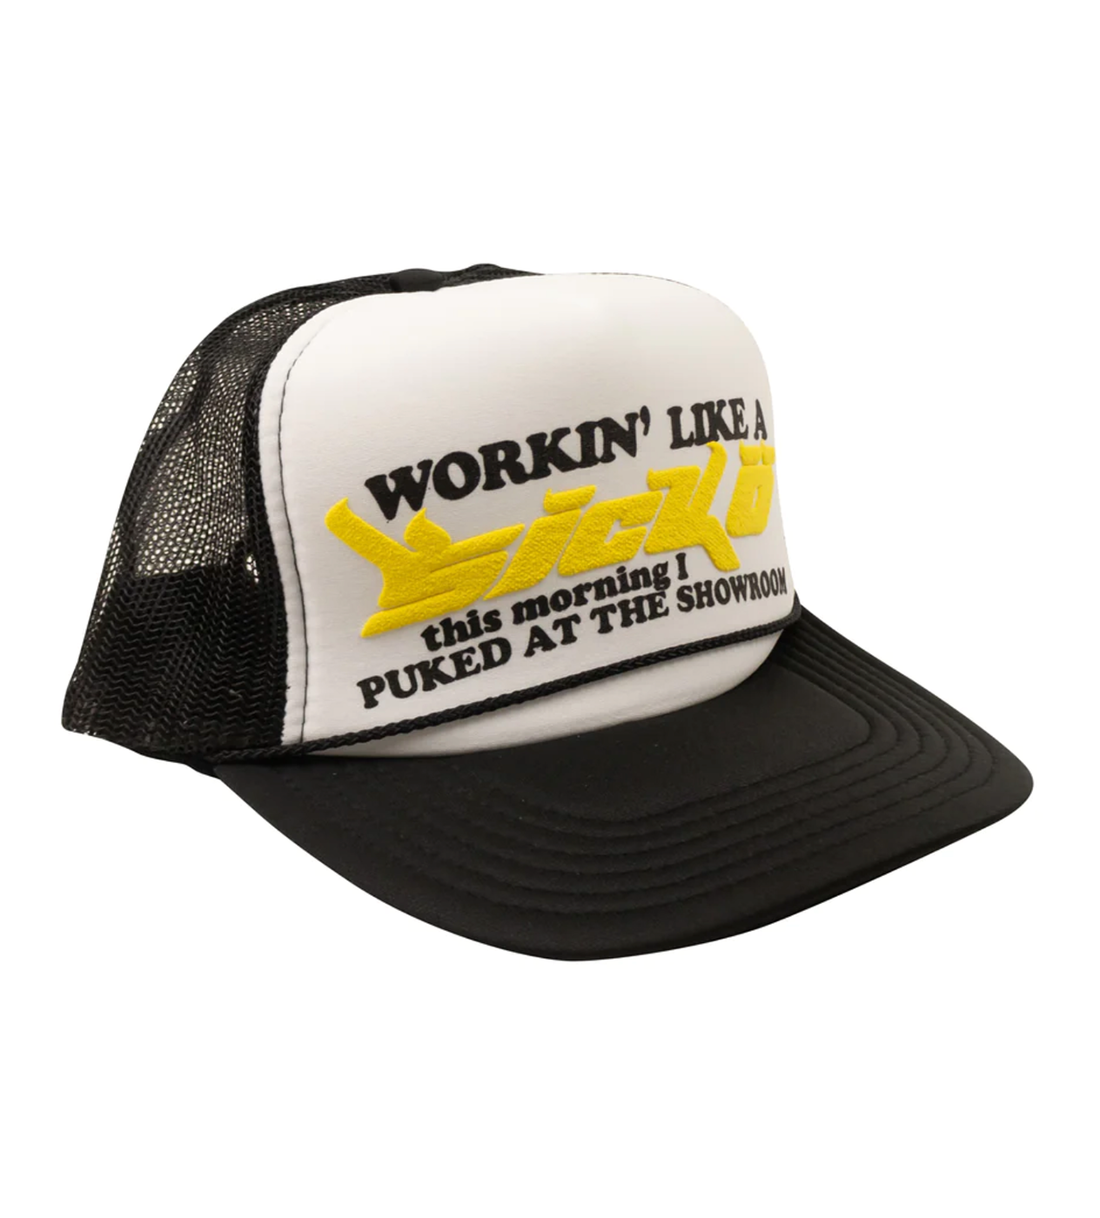 Sicko Trucker Hat Black/Yellow